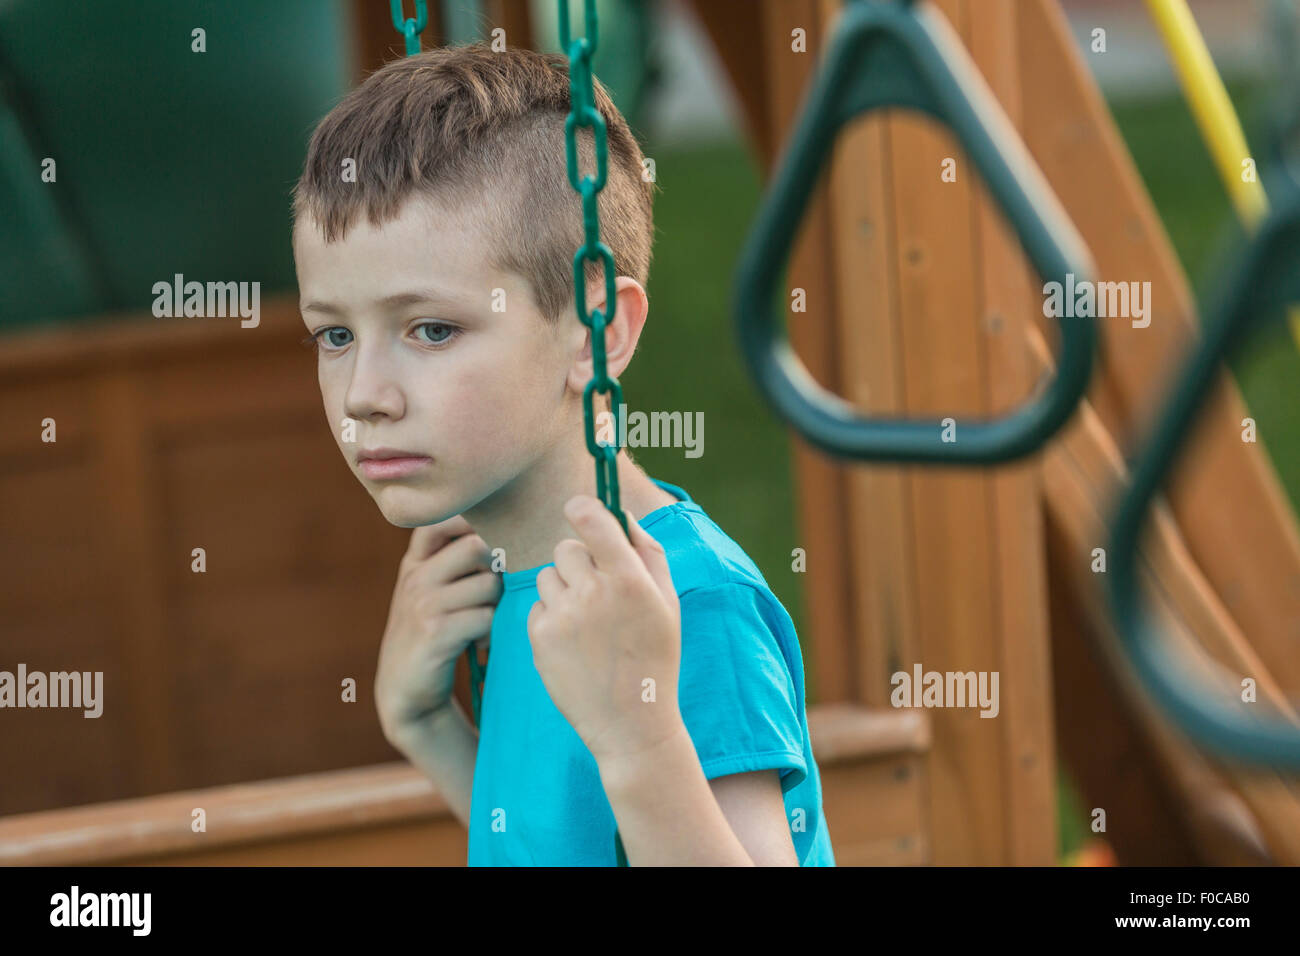 Thoughtful young boy swinging in yard Stock Photo